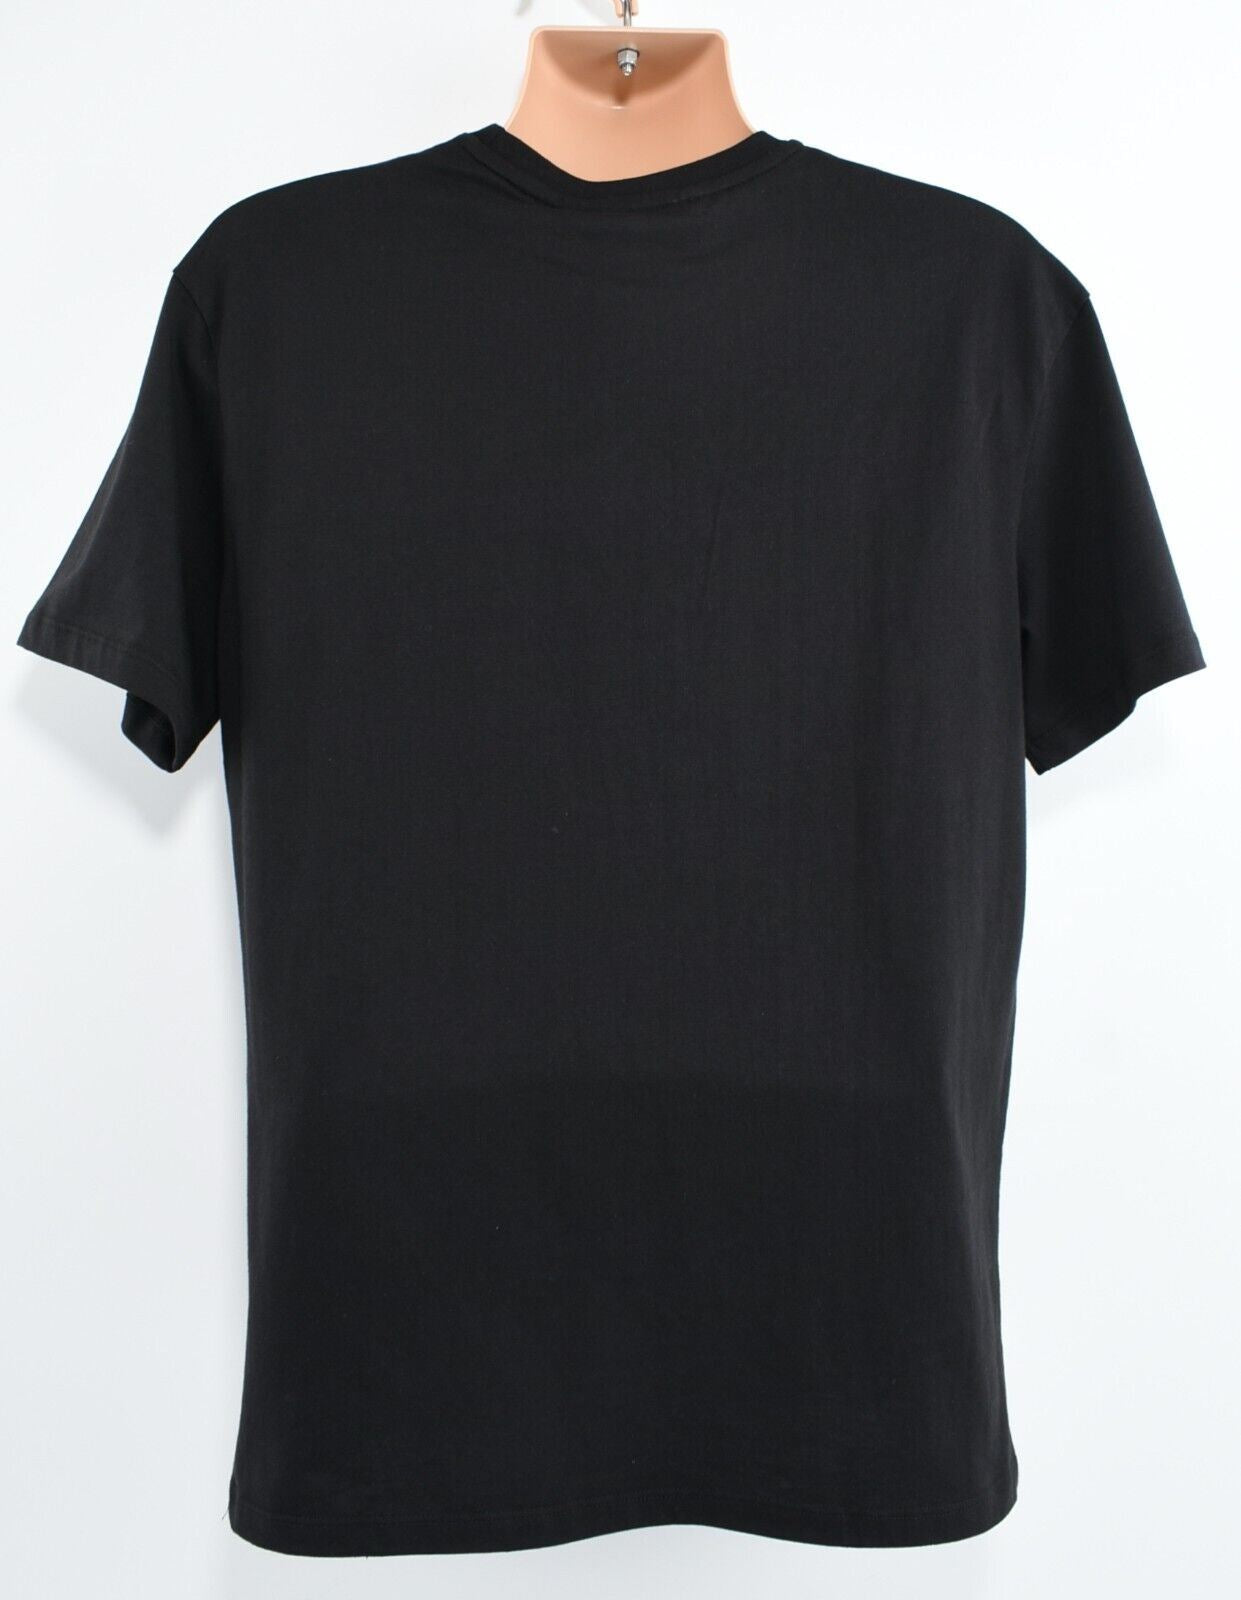 CRIMINAL DAMAGE Men's Short Sleeve T-shirt, Black with Yellow Logo, size SMALL